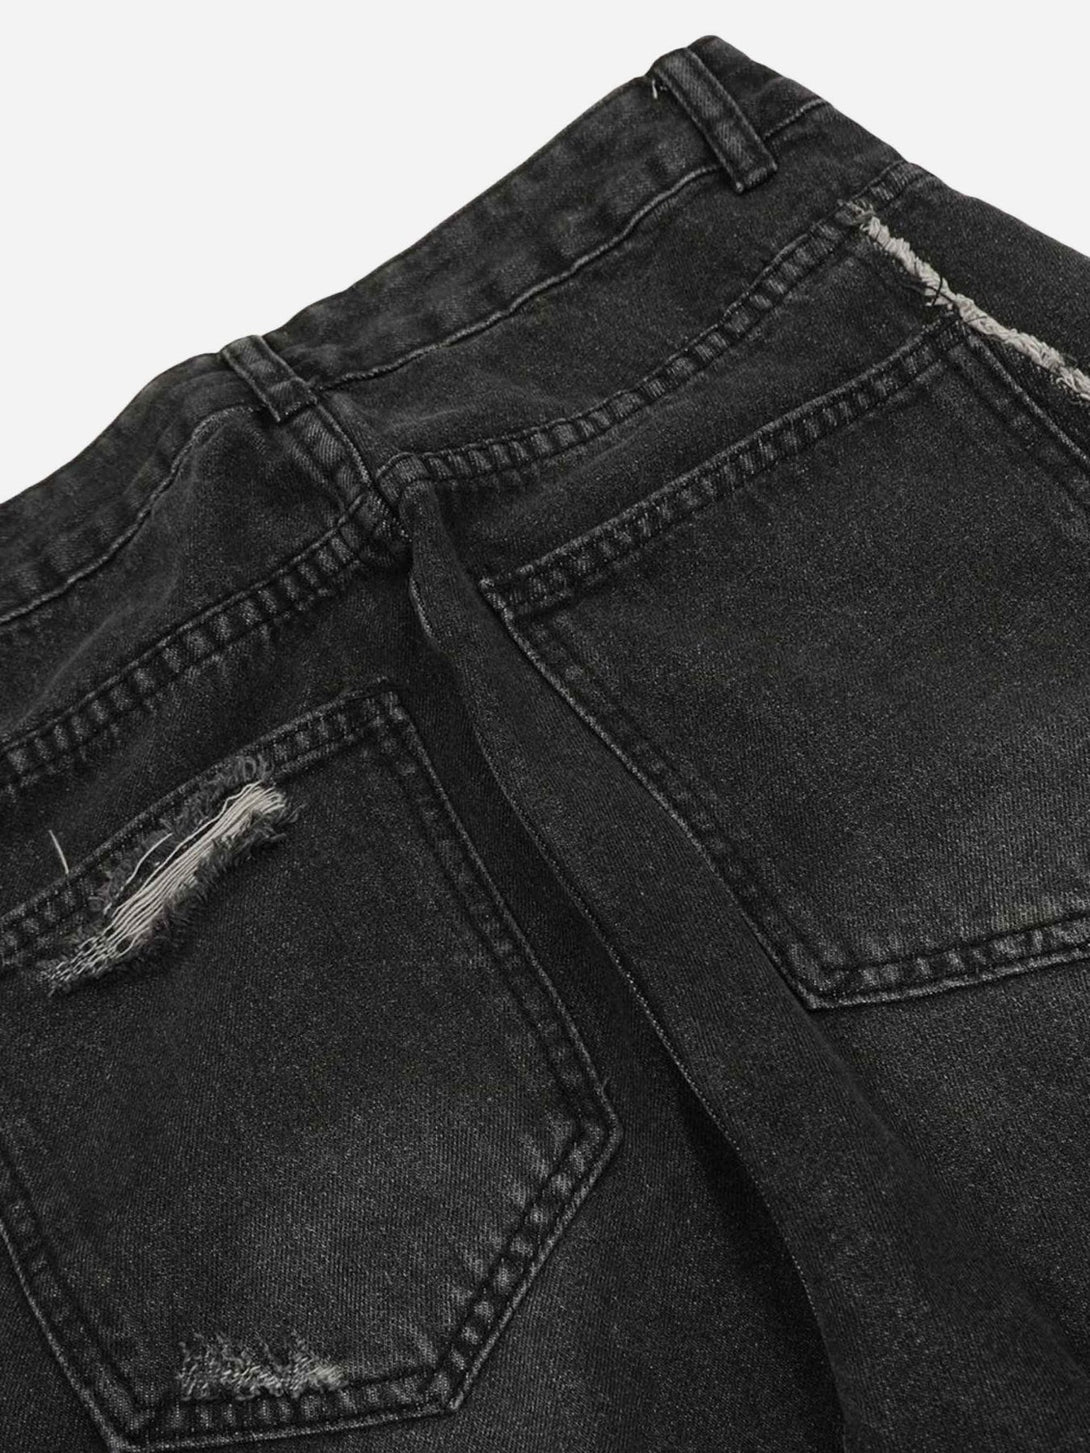 Majesda® - Washed Multi-pocket Work Jeans - 1830- Outfit Ideas - Streetwear Fashion - majesda.com